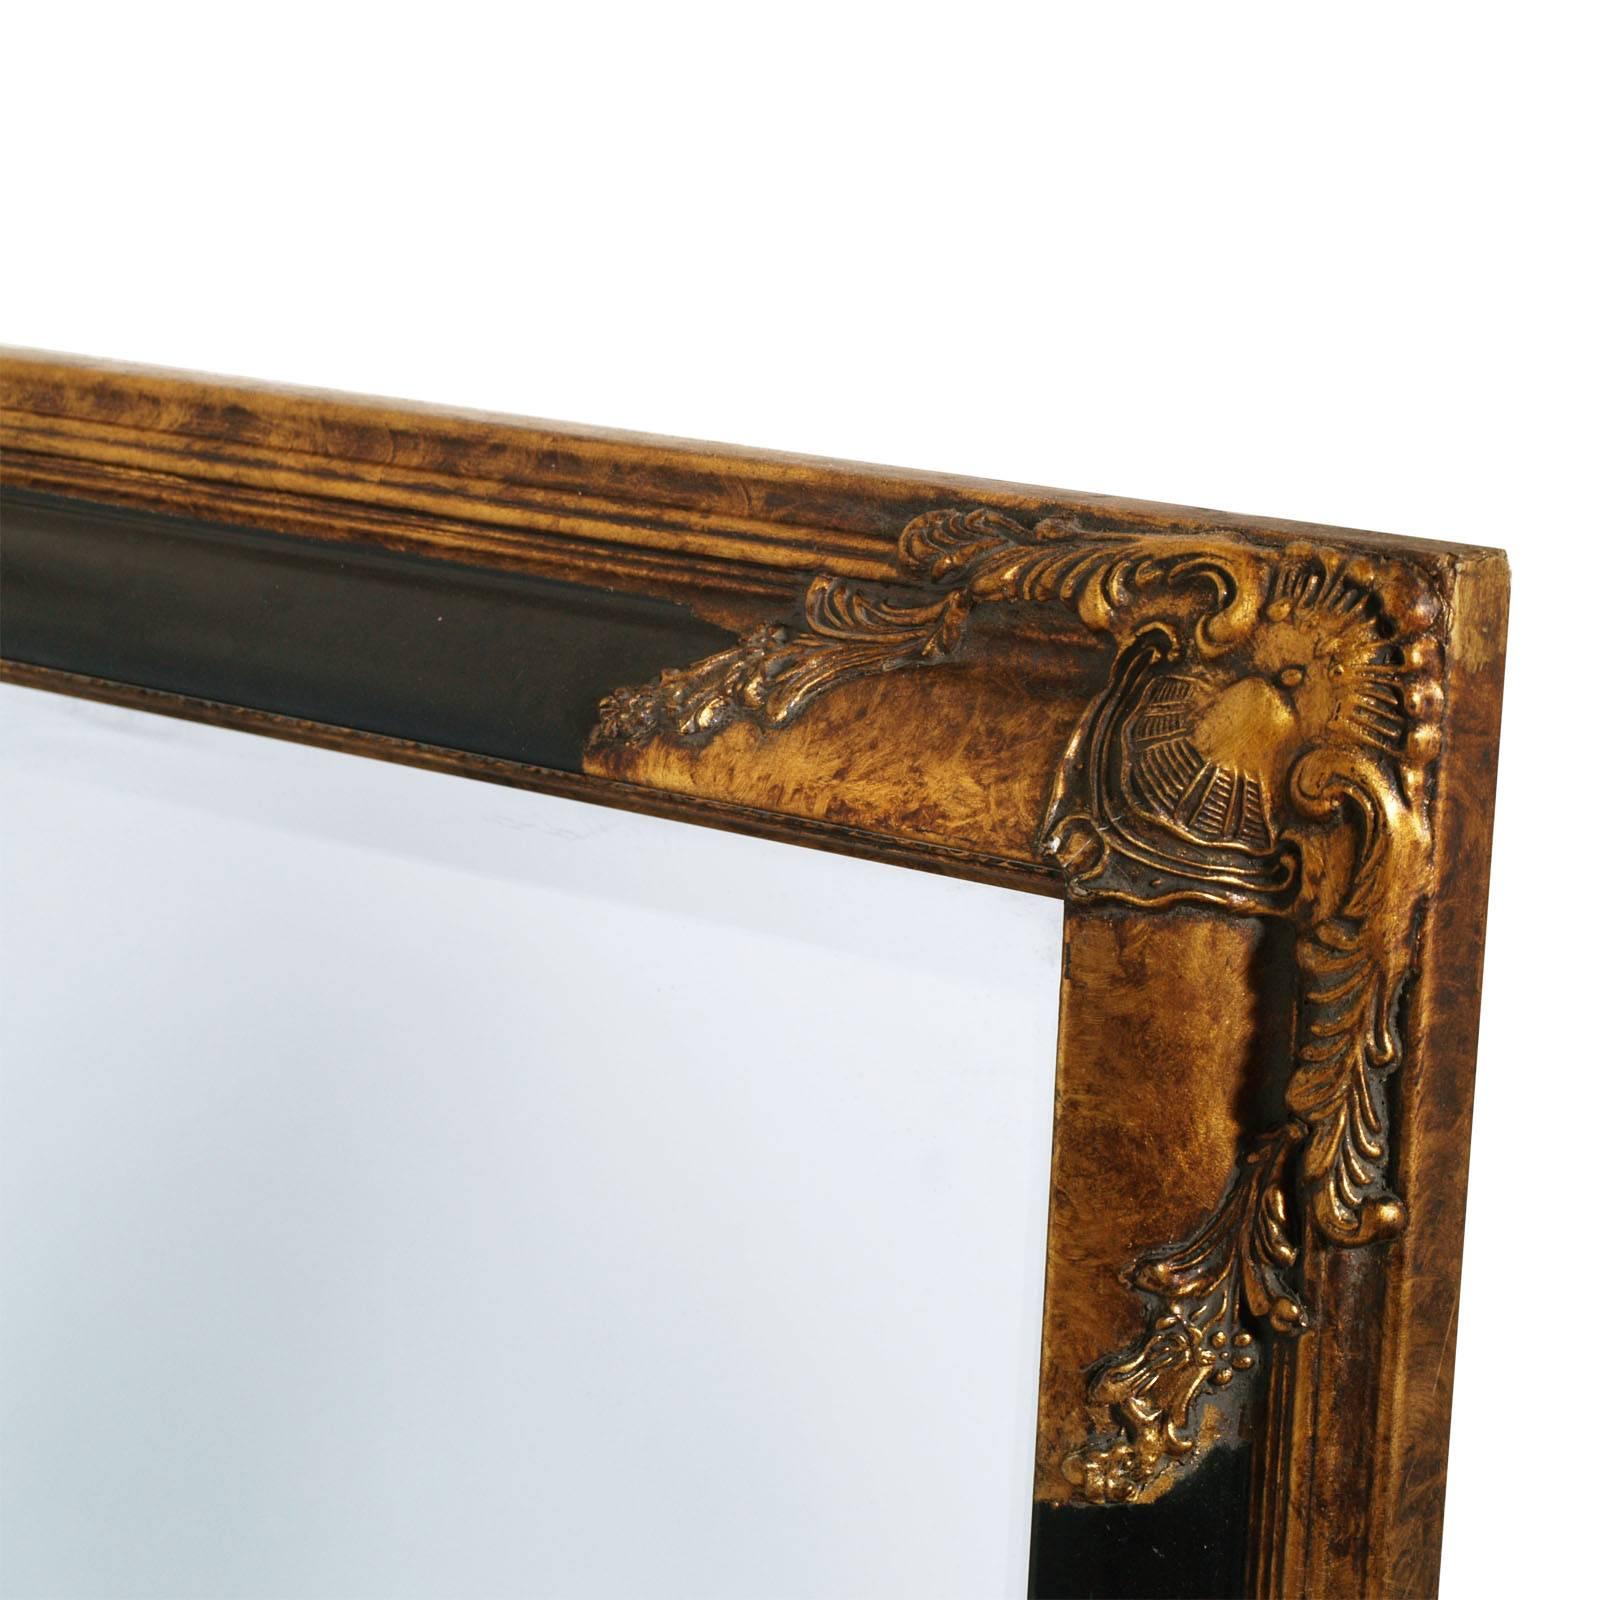 Art Deco mirror with carved golden black frame of the Florentine craftsmanship, circa 1940.
Measure cm: H 75 x W 65 x D 4.
 